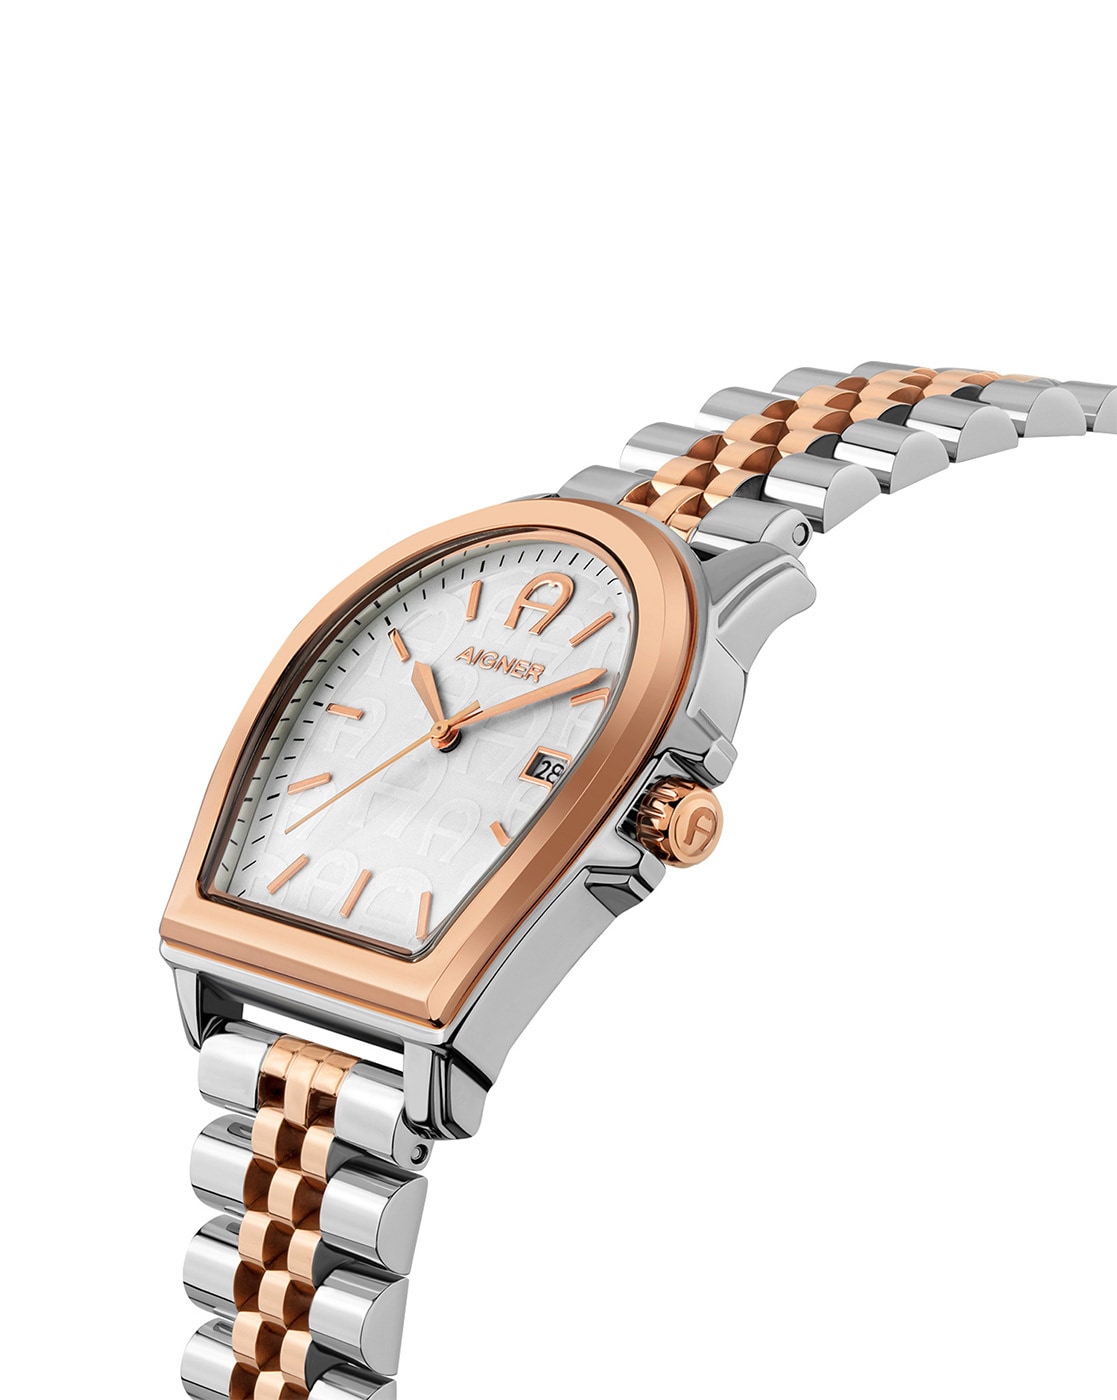 Women's watch, quartz movement, pearly white dial color - AIG-0175